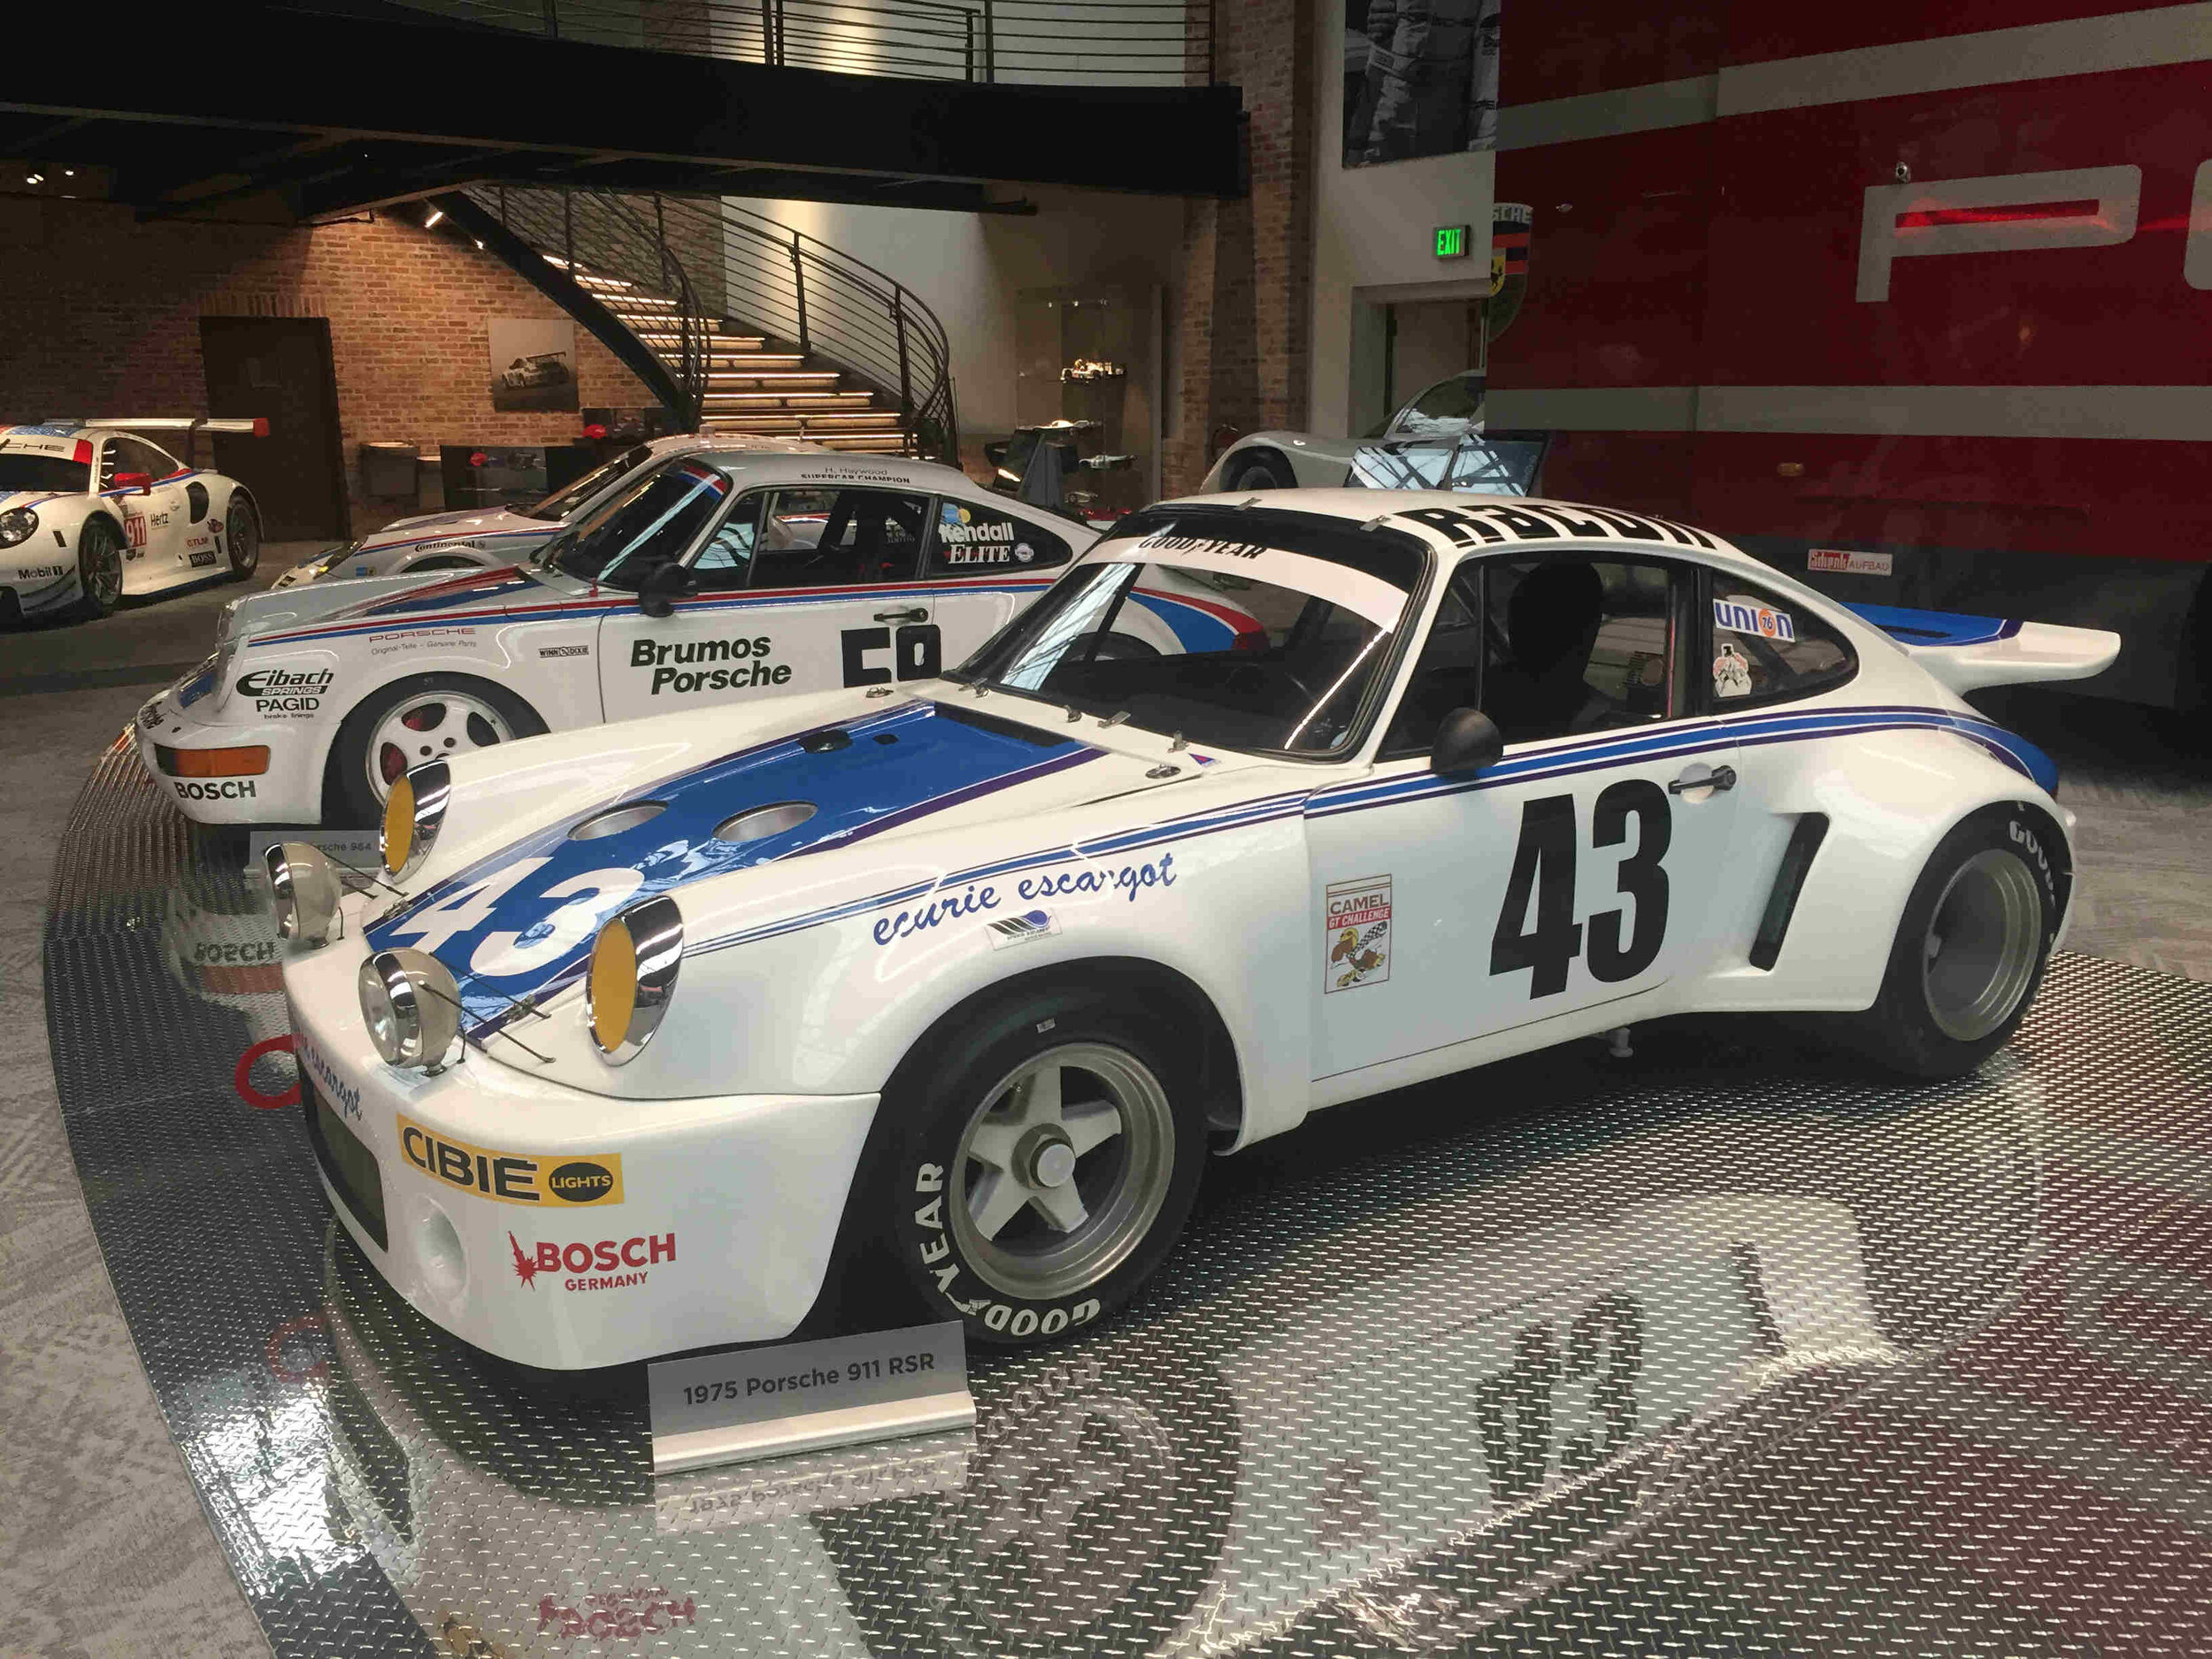 Photo gallery inside the Brumos Collection_Porsche 911 RSR_2731.jpg